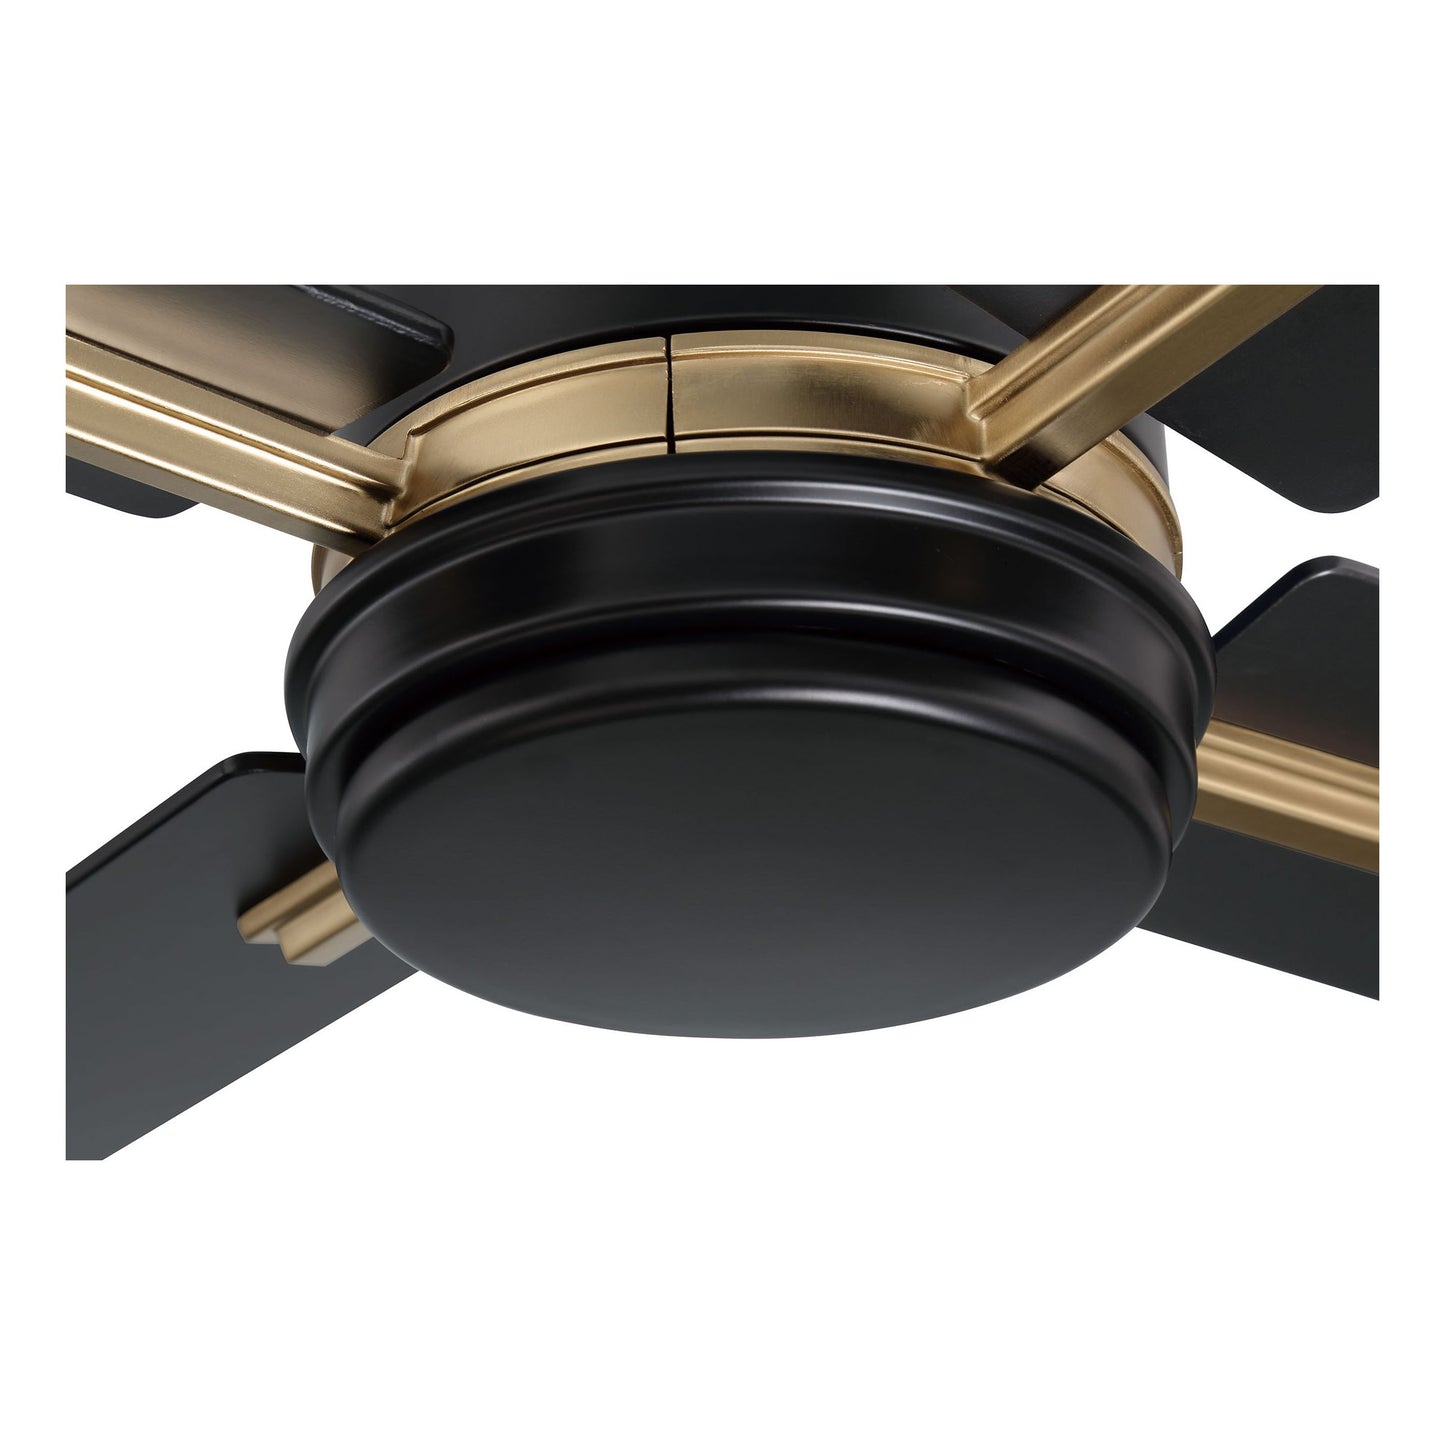 TEA52FBSB4 - Teana 52" 4 Blade Ceiling Fan with Light Kit - Wall Control - Flat Black / Satin Brass